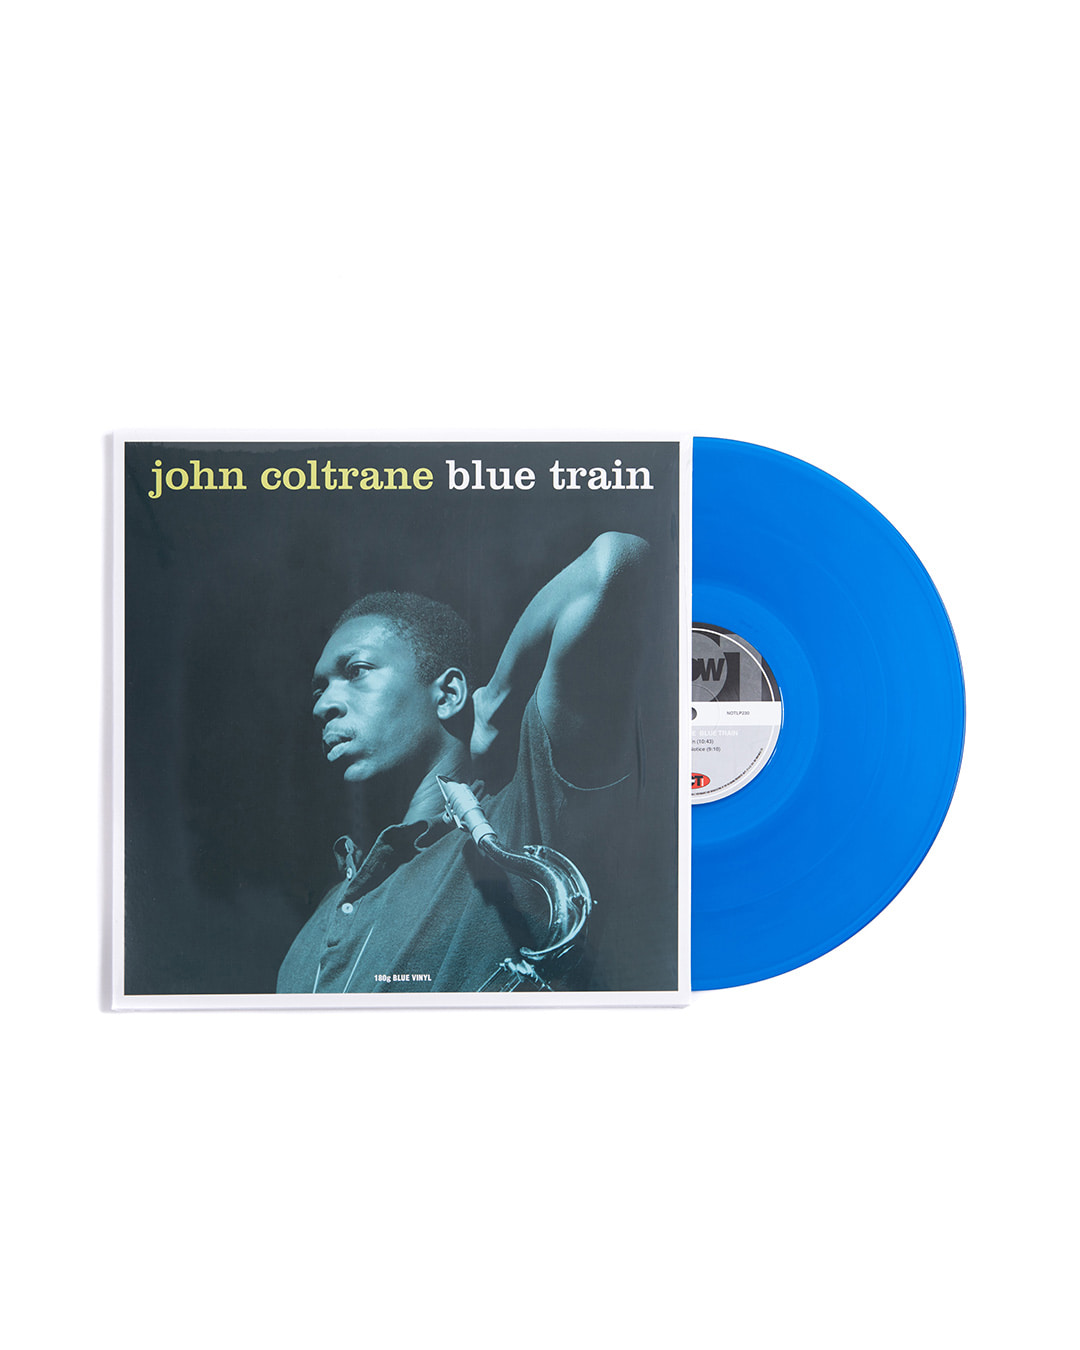 JOHN COLTRANE - BLUE TRAIN (blue disc)